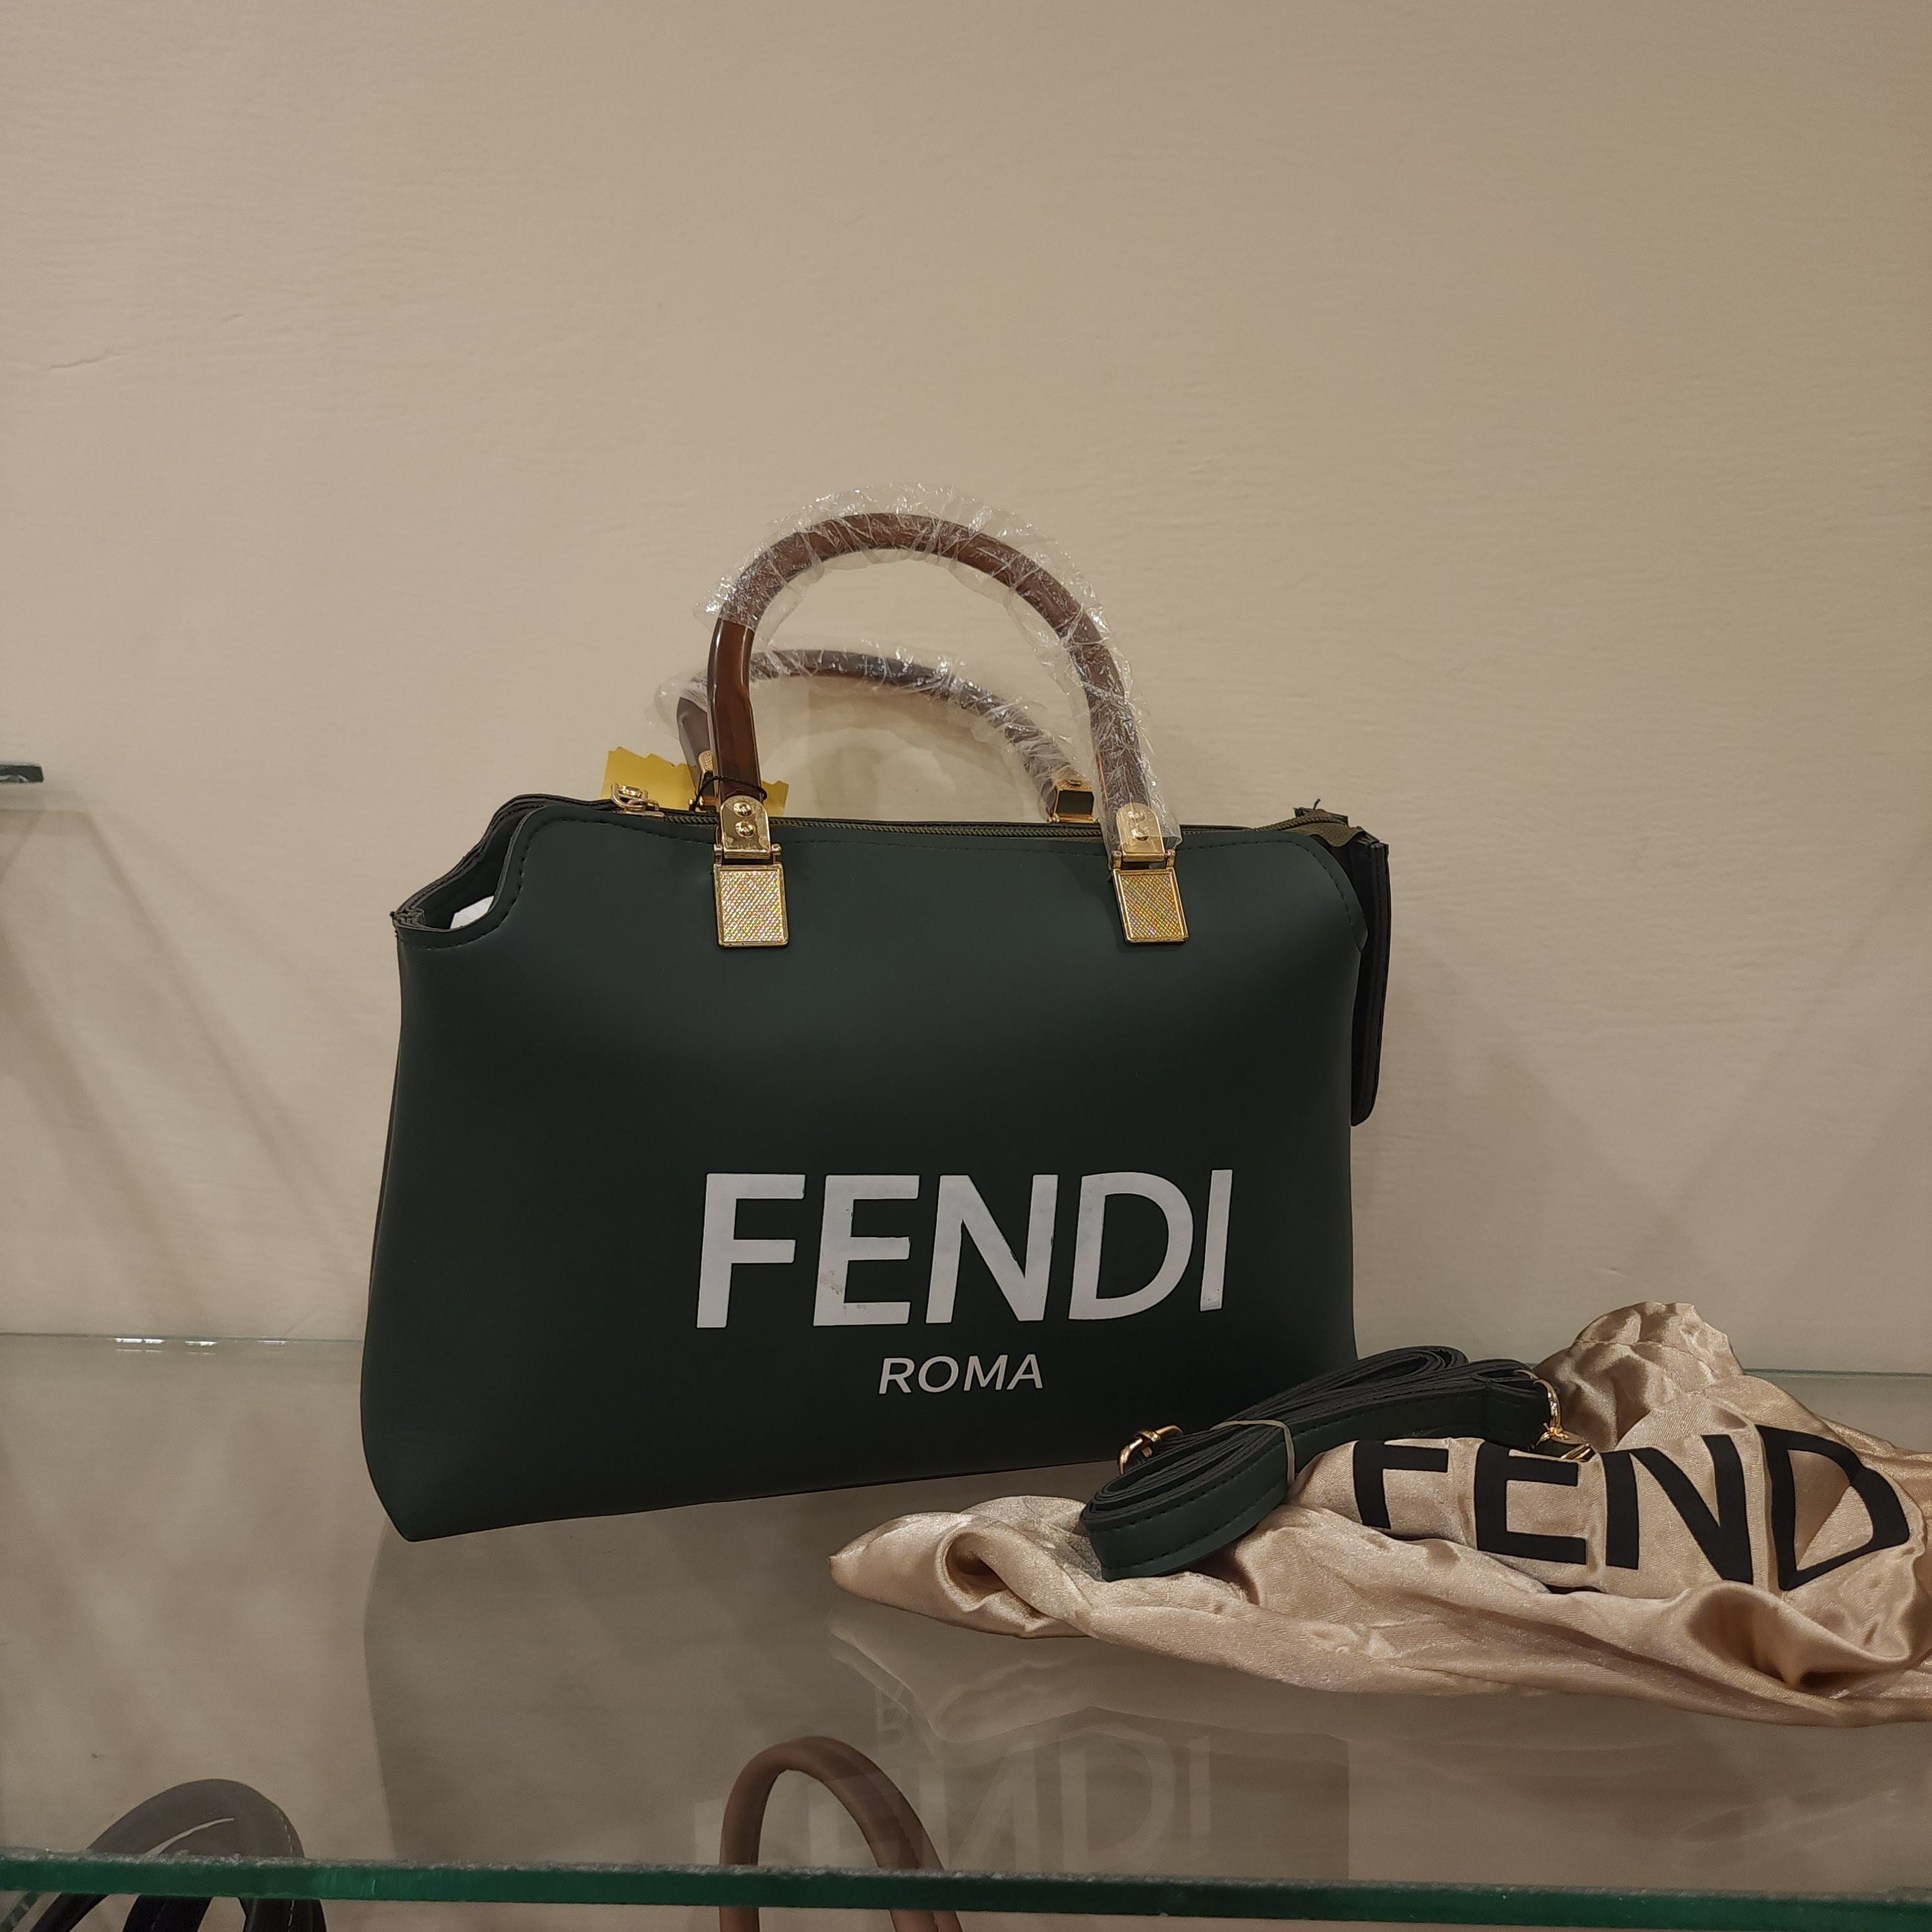 Green Handbag - Maha fashions -  Handbags & Wallets